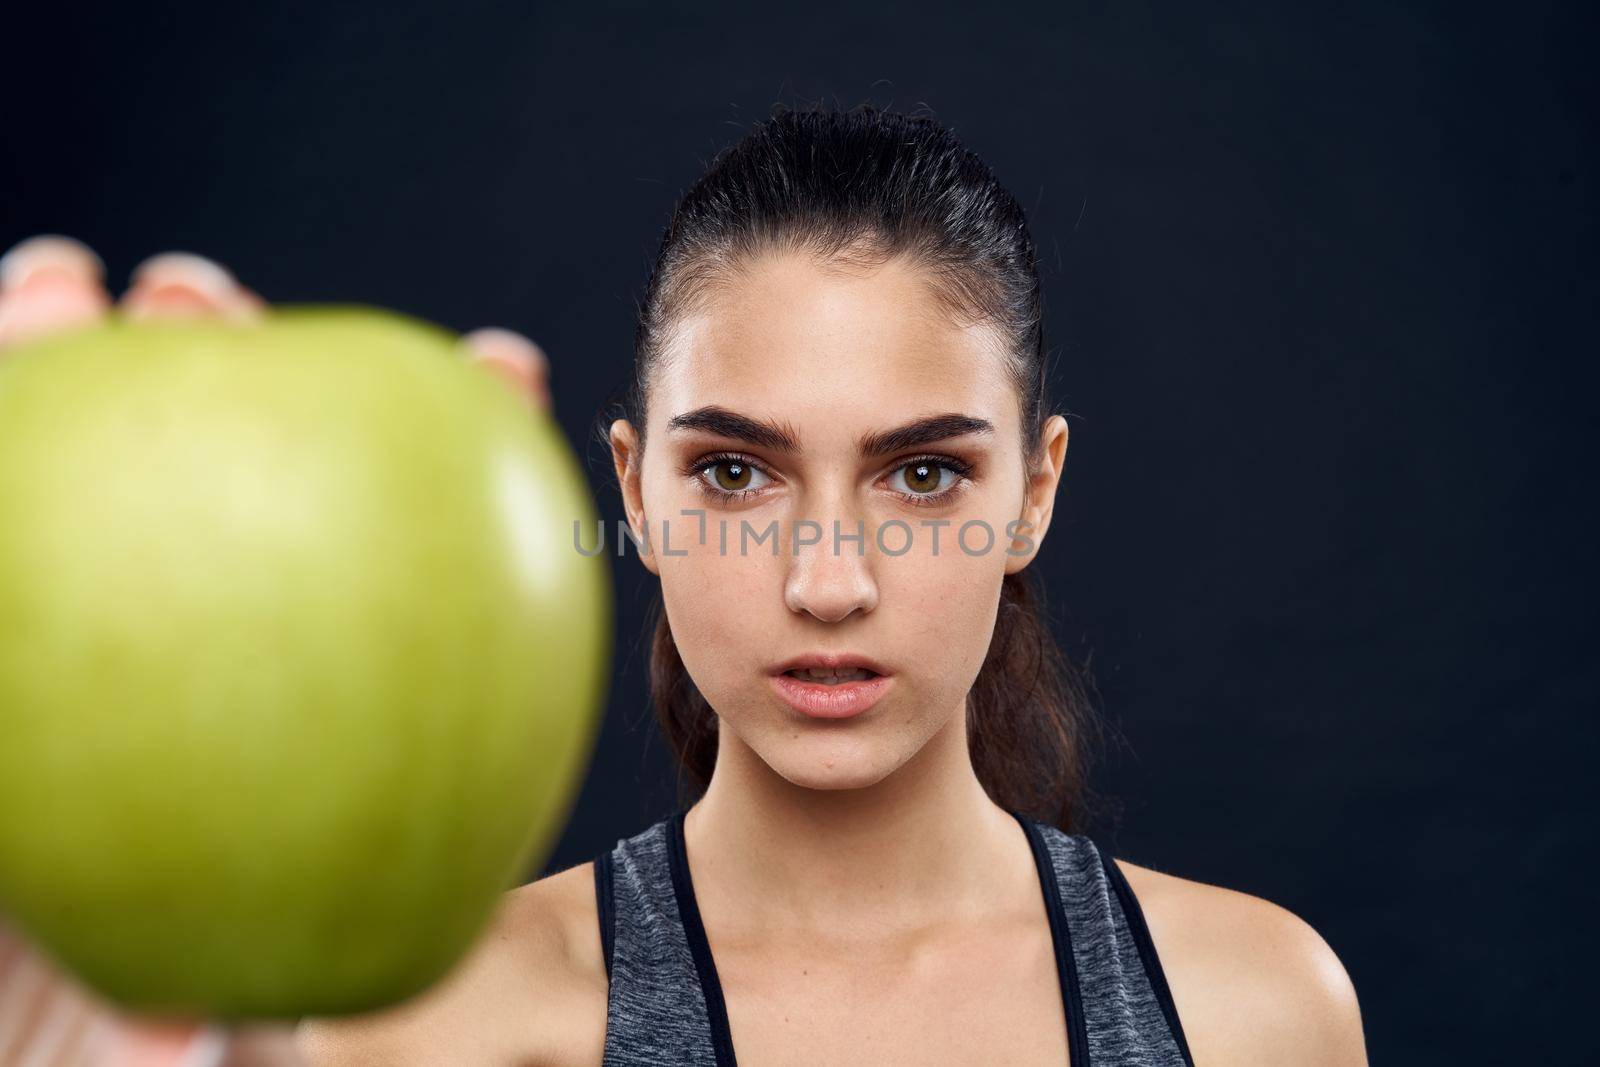 athletic woman slim figure green apple health. High quality photo